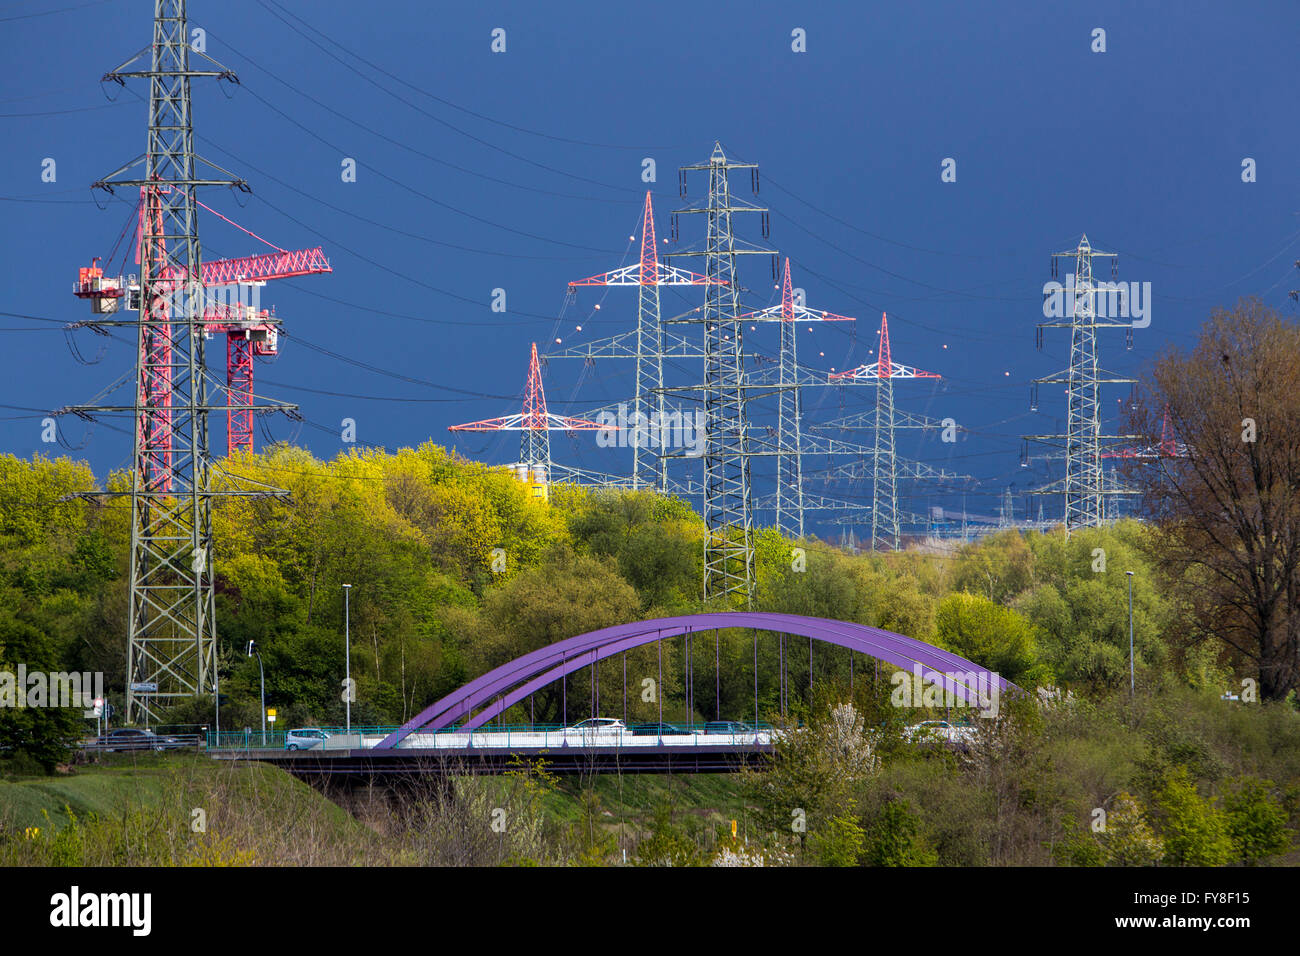 Bridge over river Emscher, in Oberhausen, Germany, dark cloudy sky, high wire electrical power lines, Stock Photo